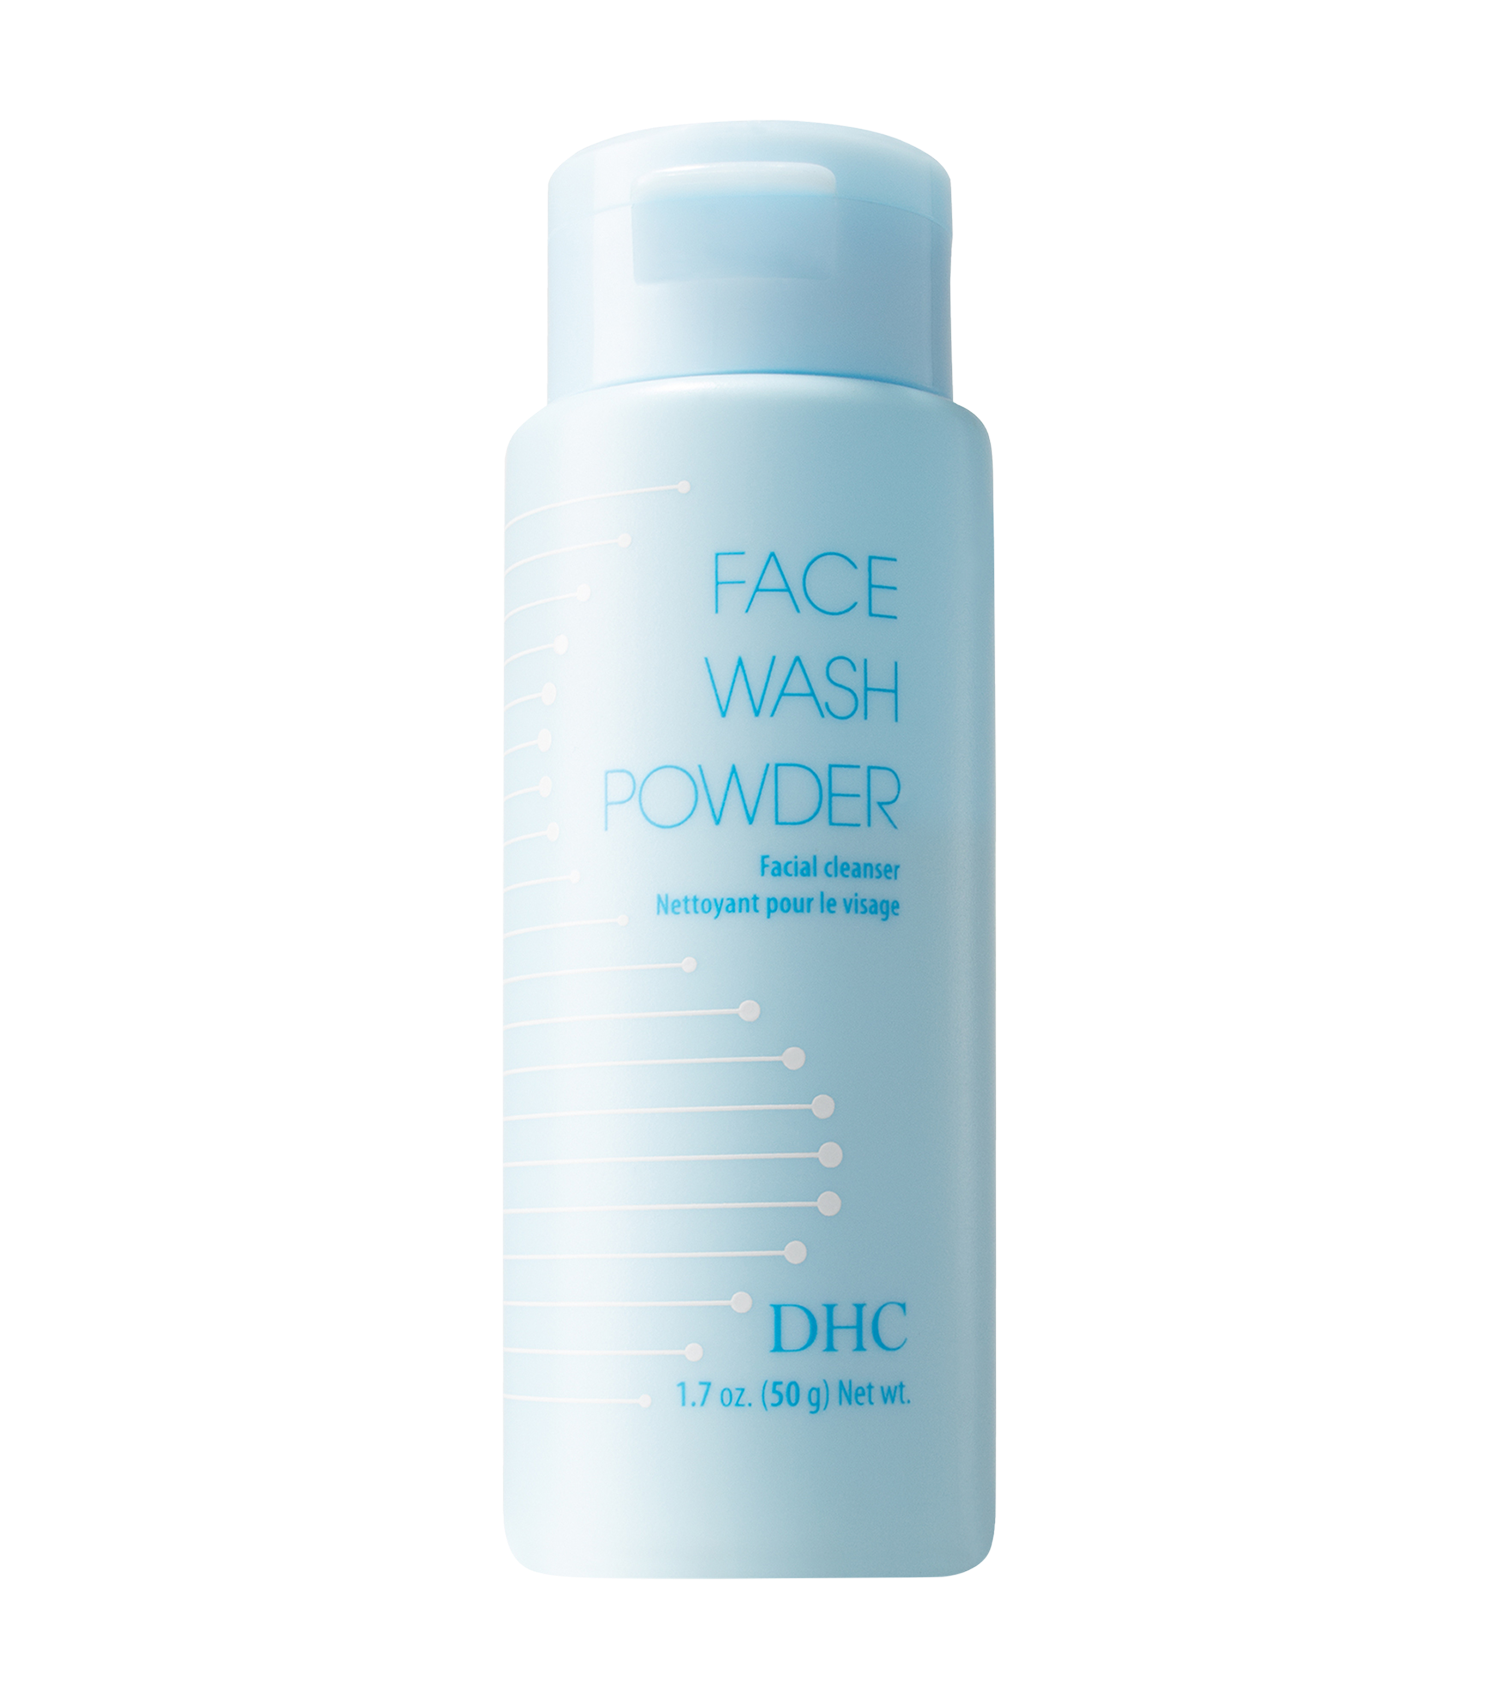 Face Wash Powder